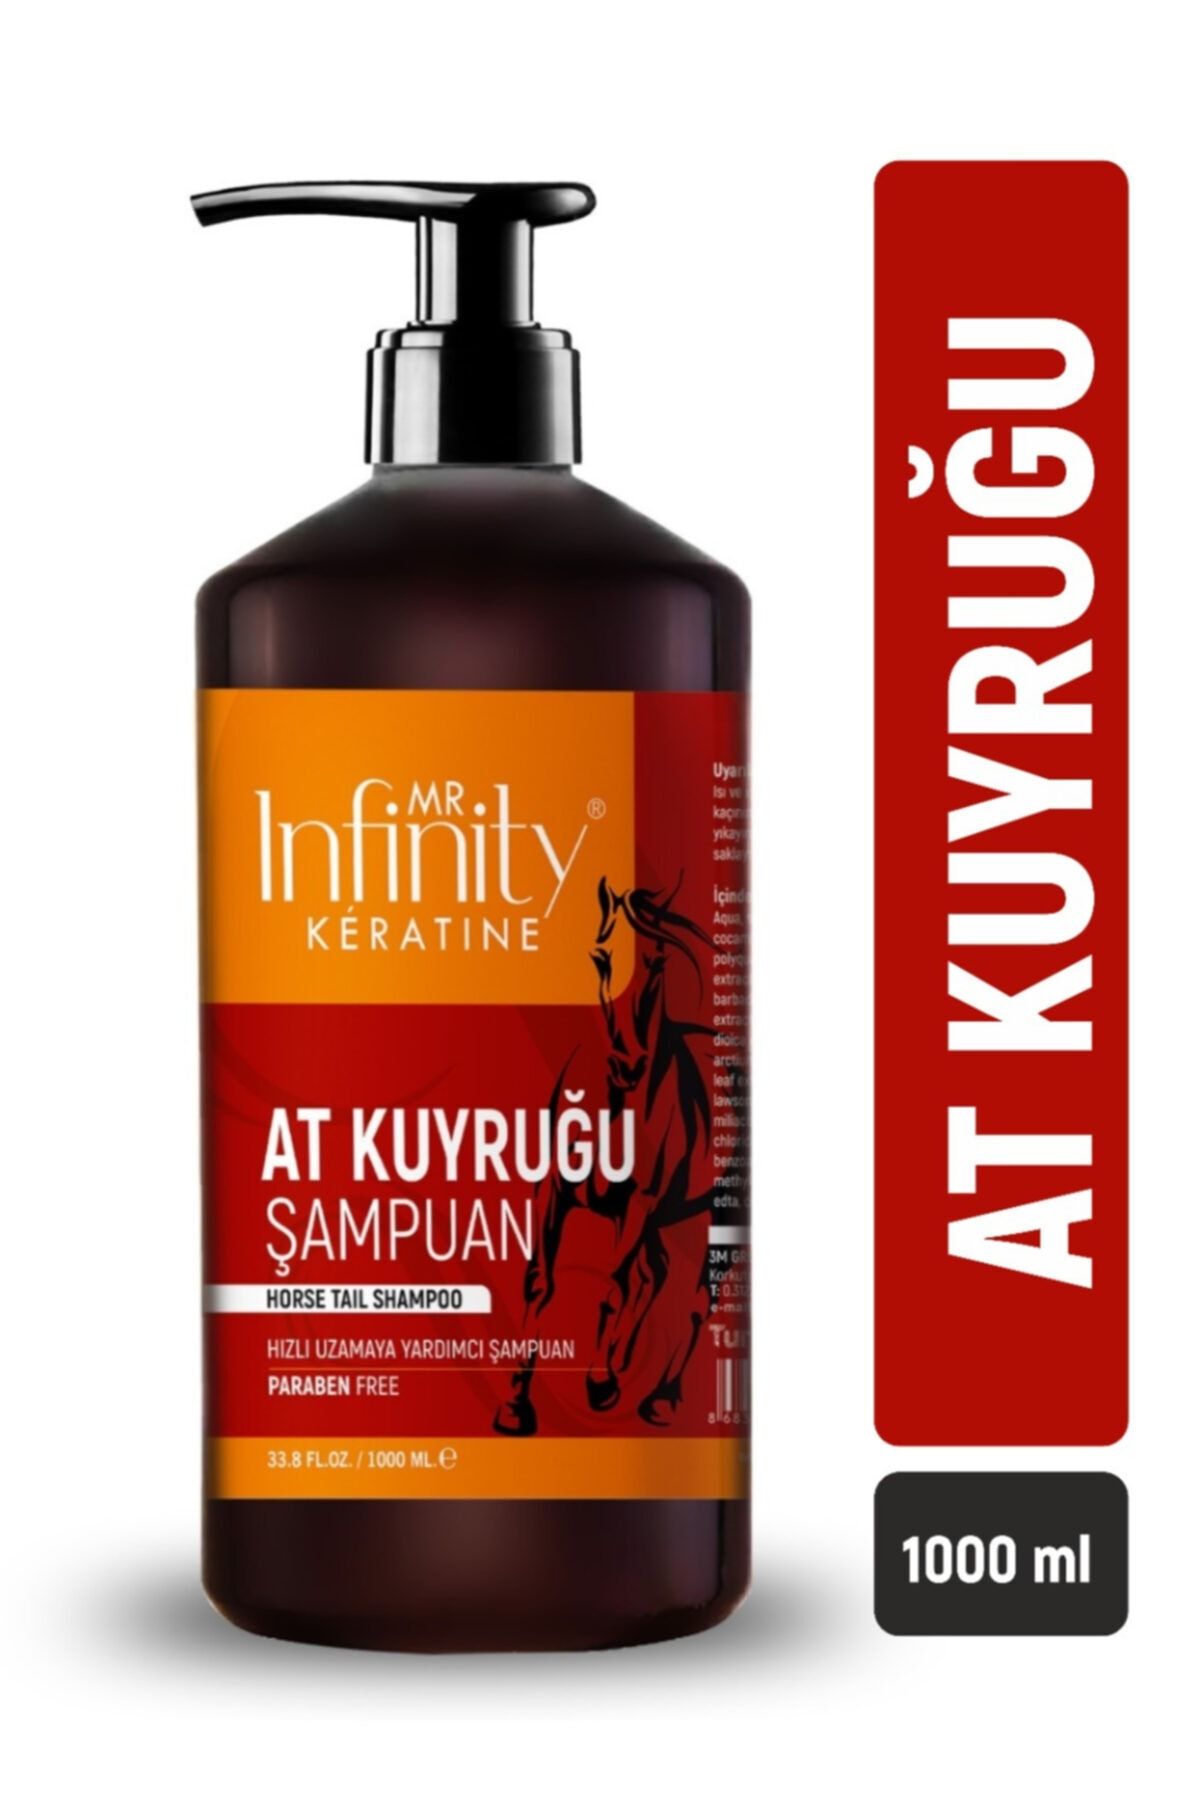 mr infinity Infinity Expert At Kuyruğu Şampuan & Horse Taıl Shampoo 1000ml